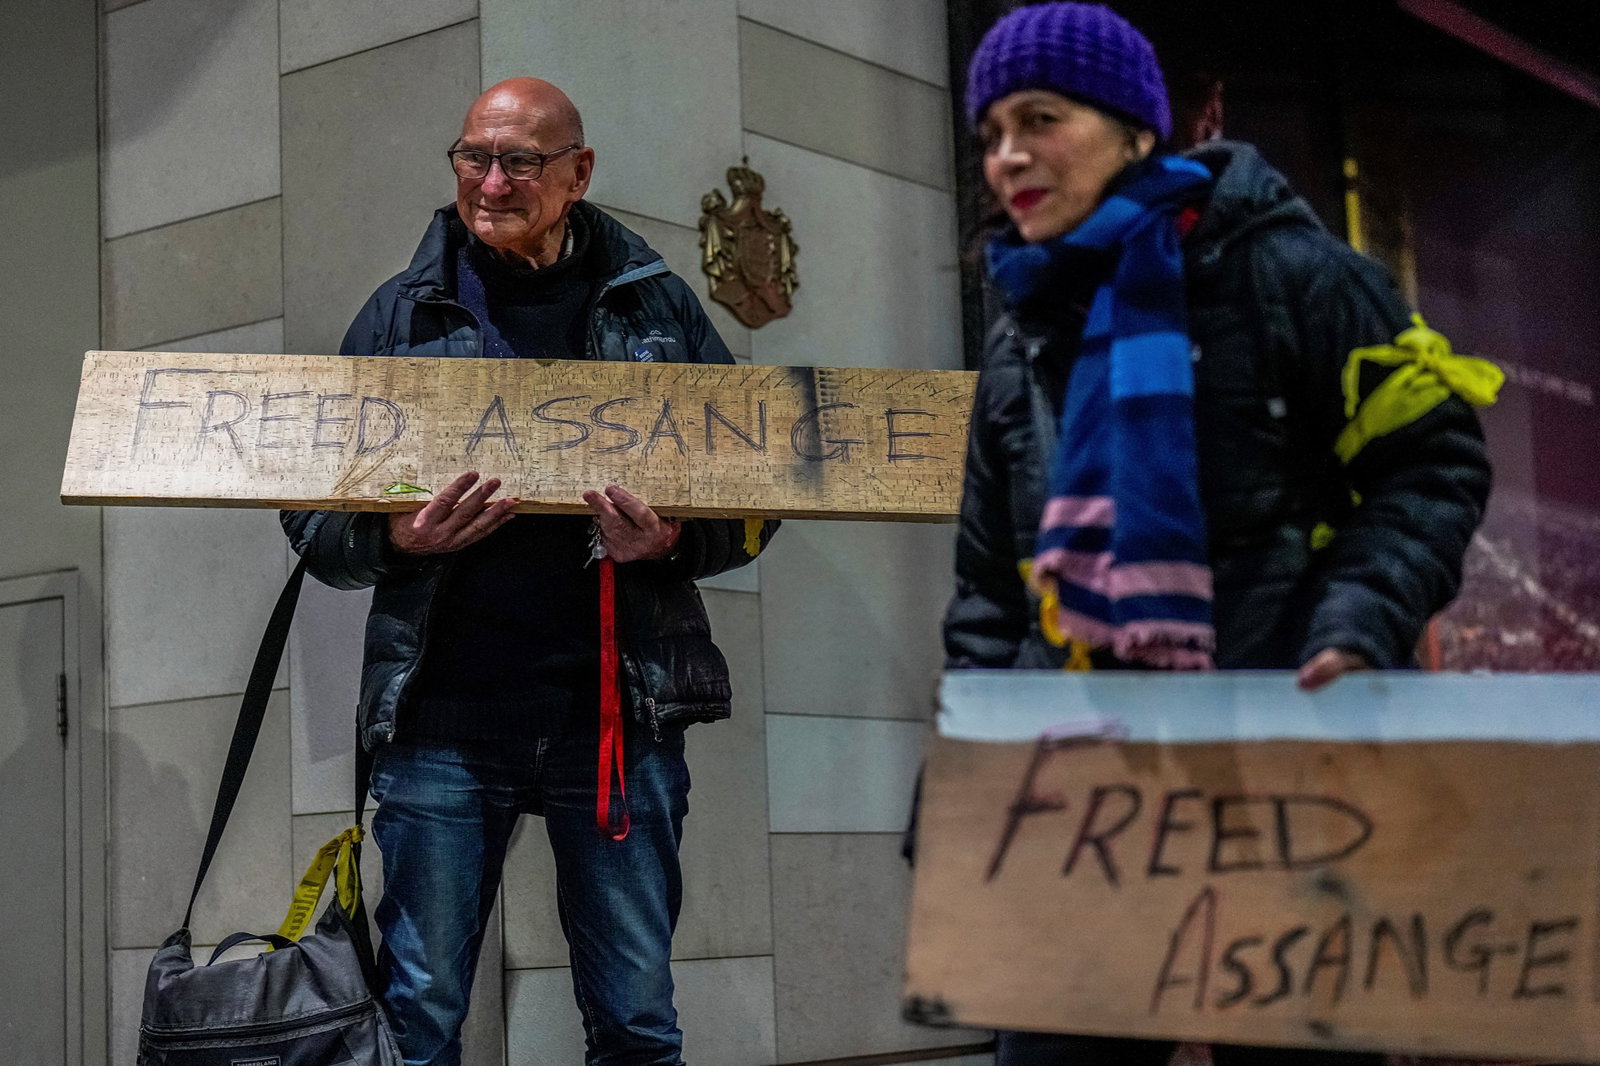 Man holds sign saying "Freed Assange"